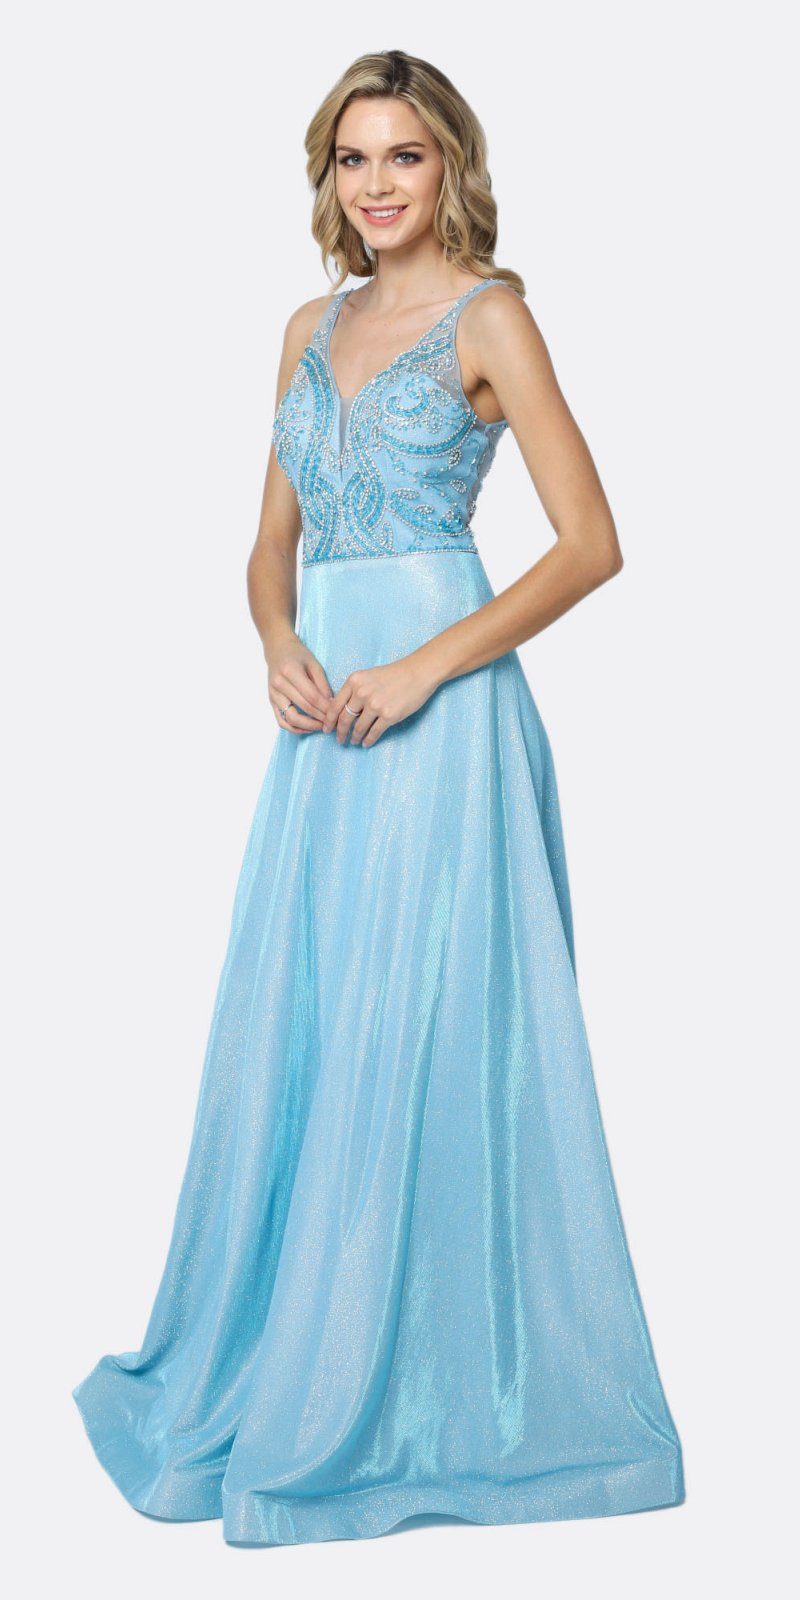 Juliet 699 Metallic Glitter Ice Blue Prom Dress Embellished Bodice V-Neck Sleeveless